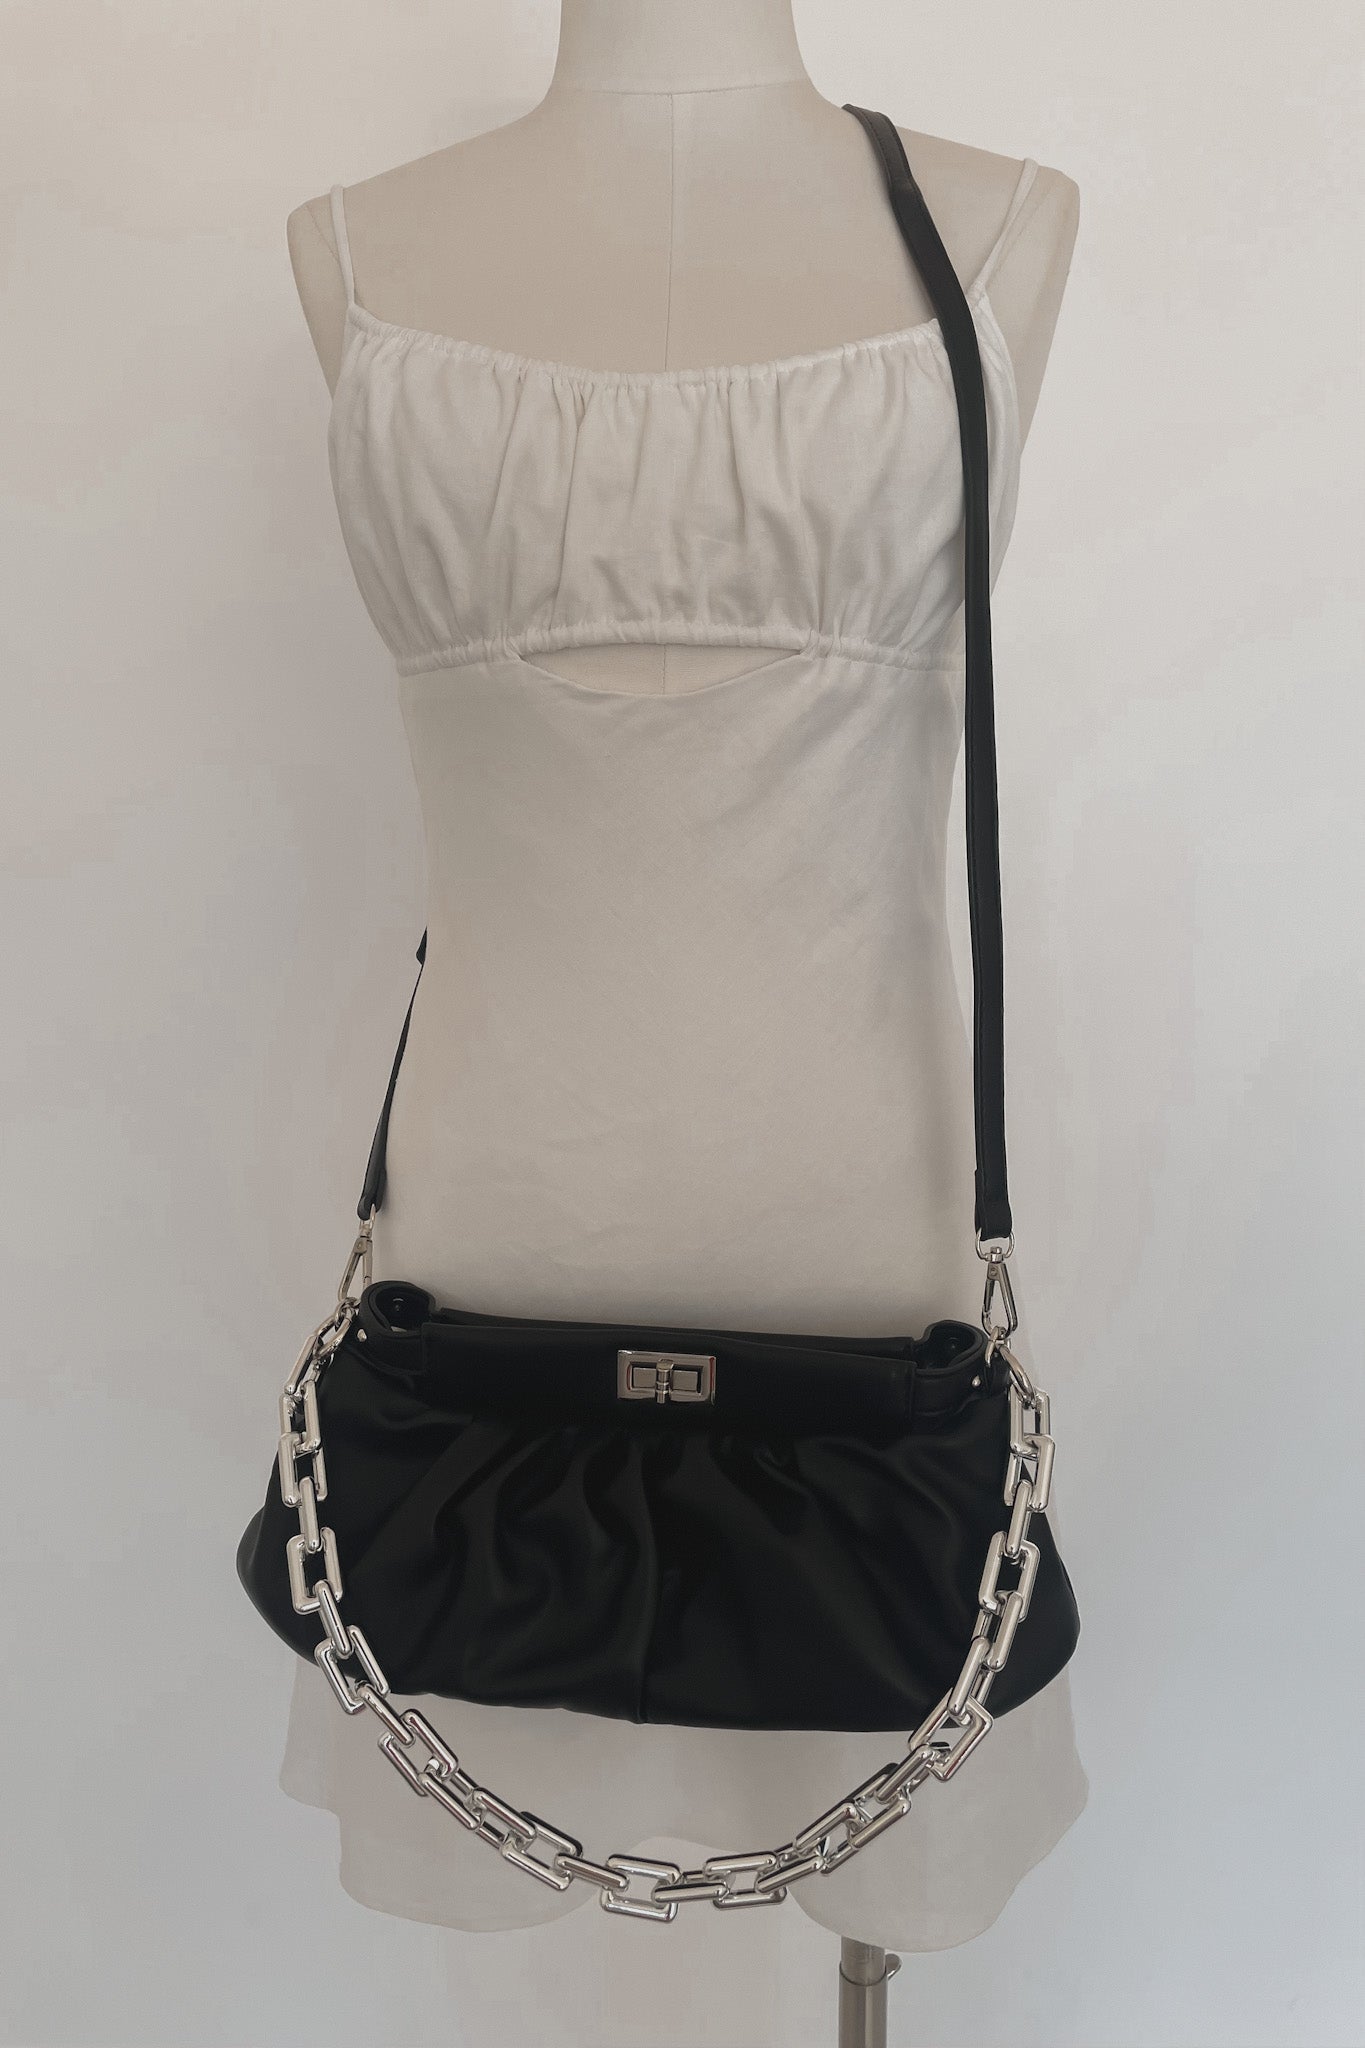 Handbags for Women Large Designer Ladies Hobo bag Bucket Purse Faux Leather  | eBay